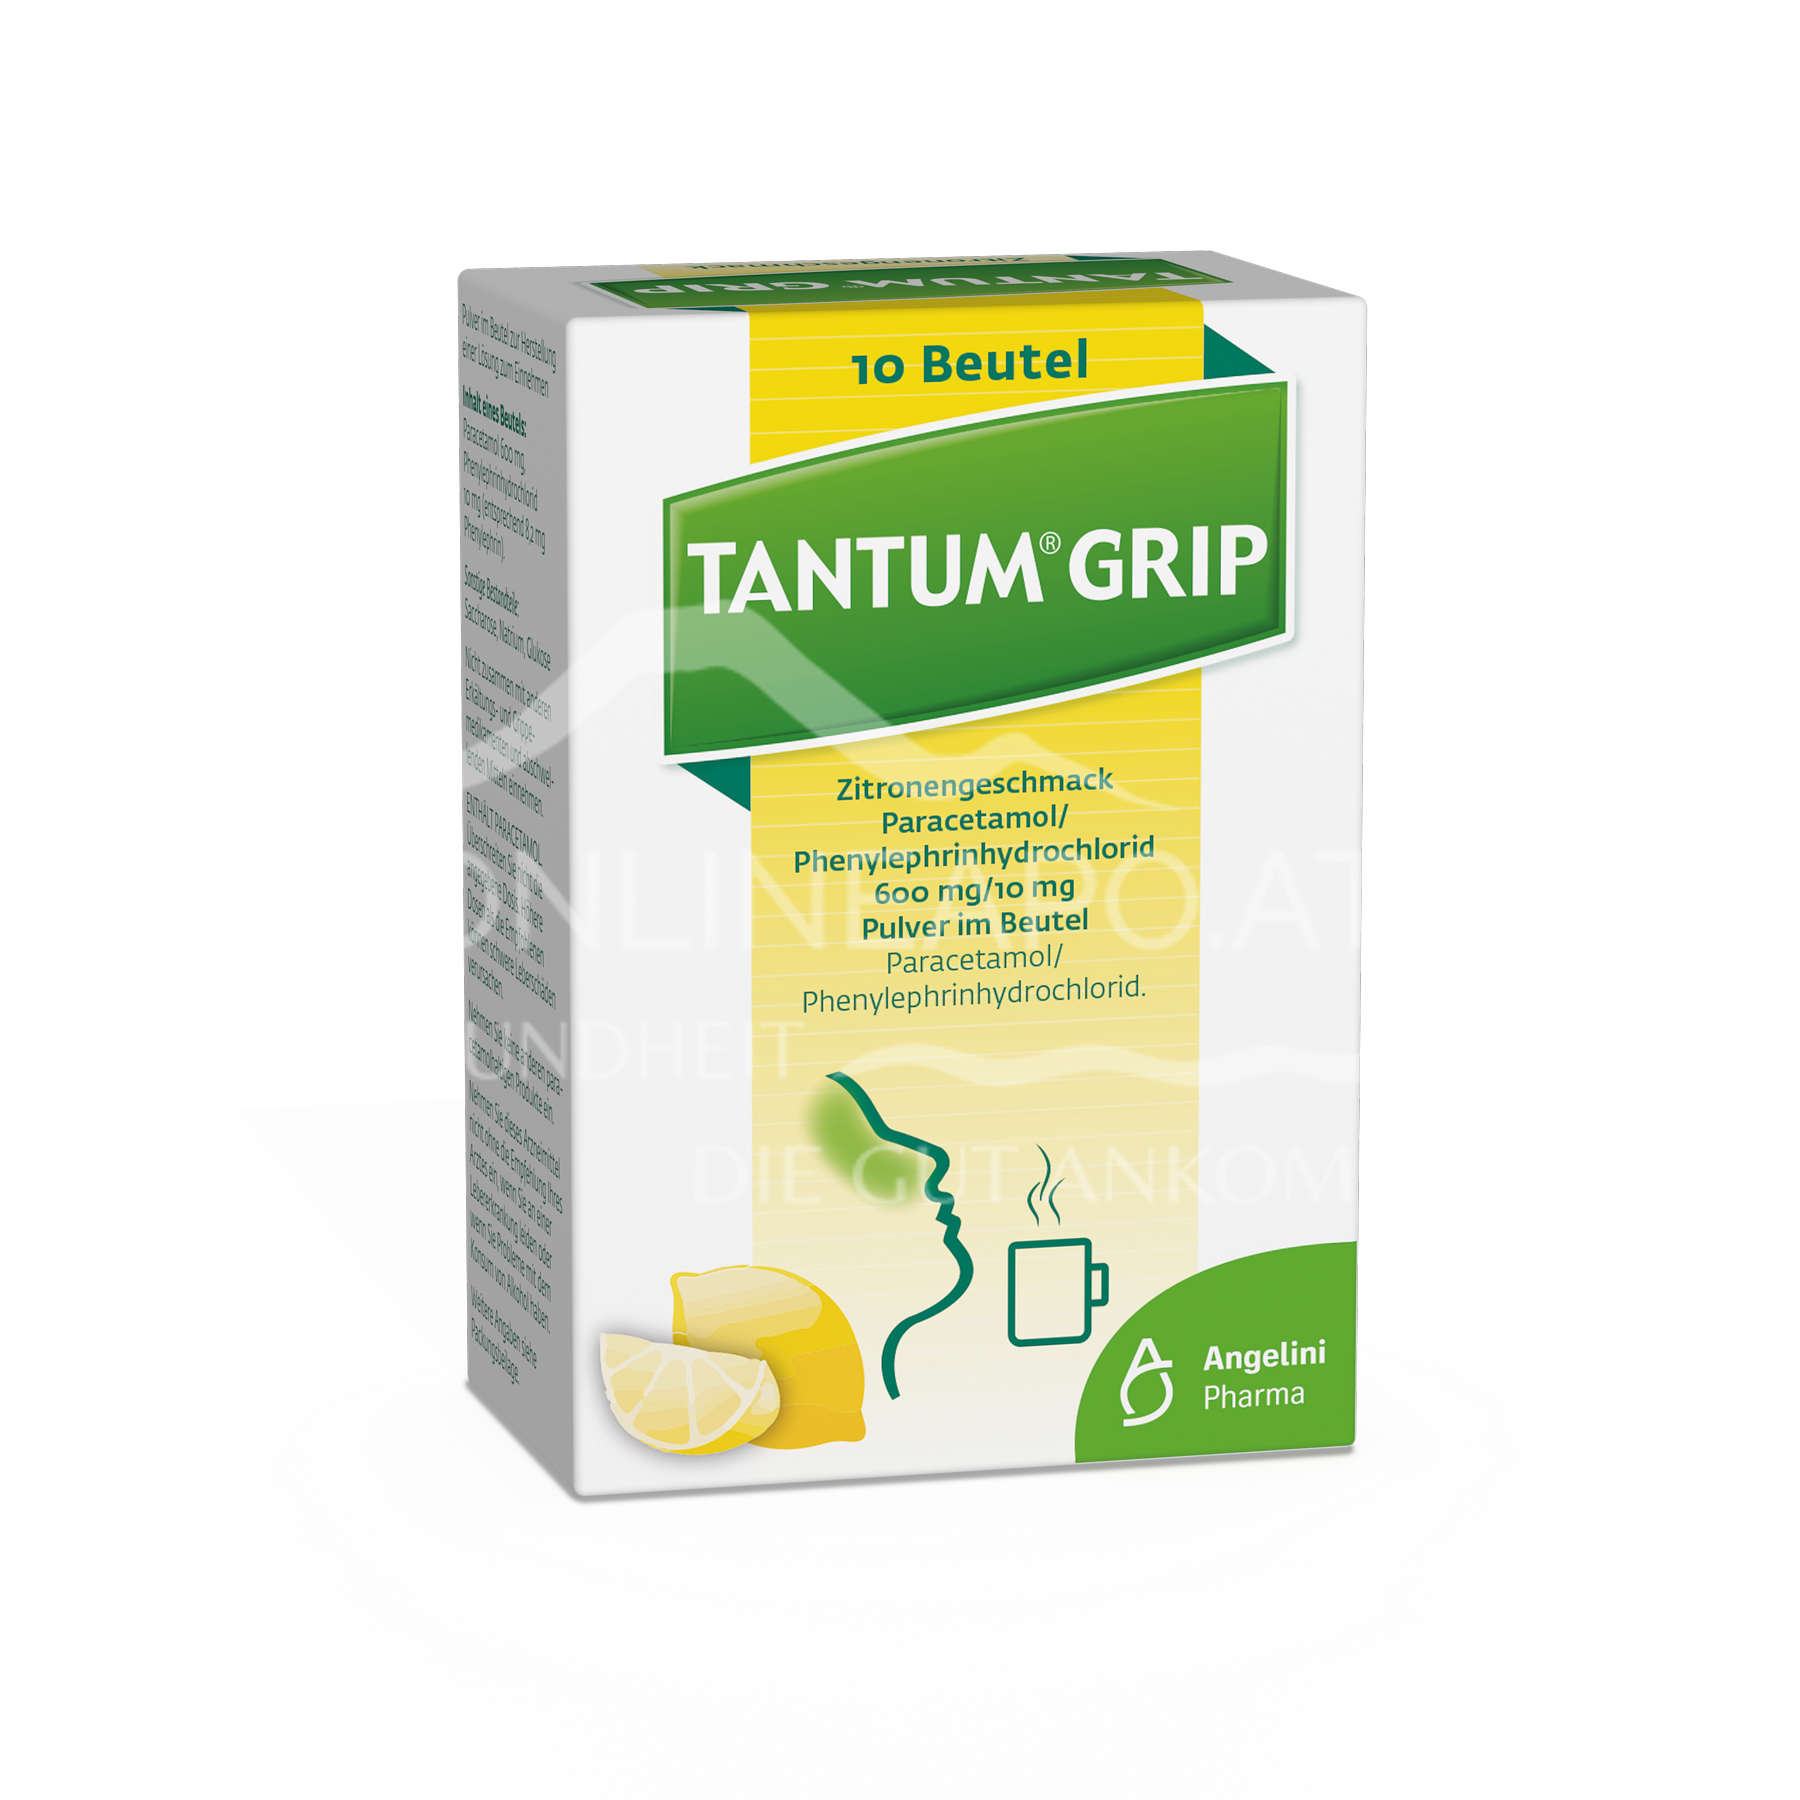 Tantum Grip Zitronengeschmack 600 mg/10 mg Pulver